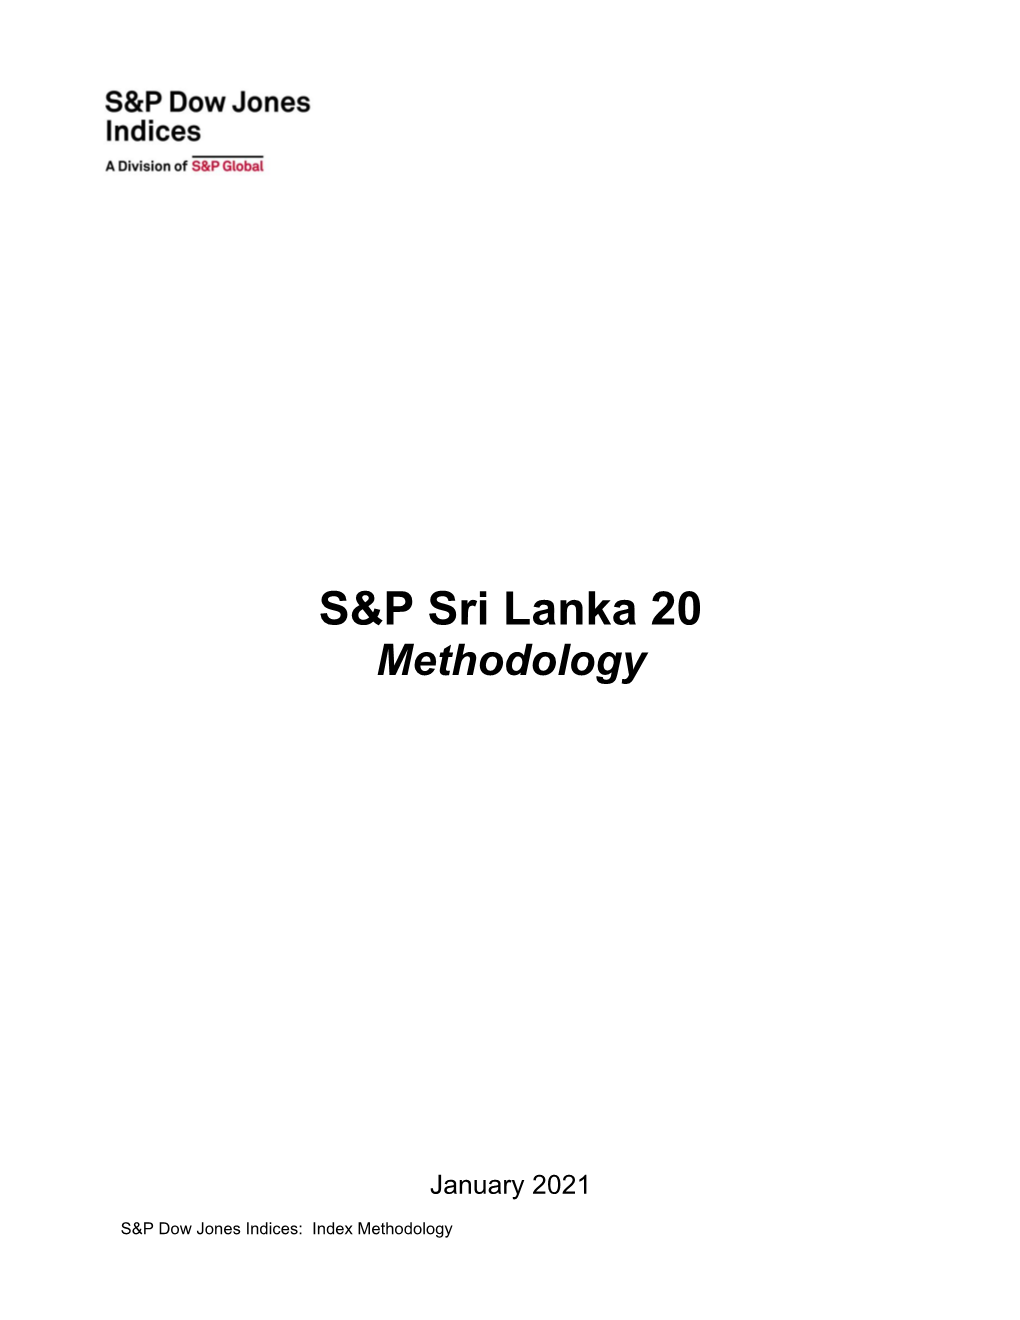 S&P Sri Lanka 20 Methodology